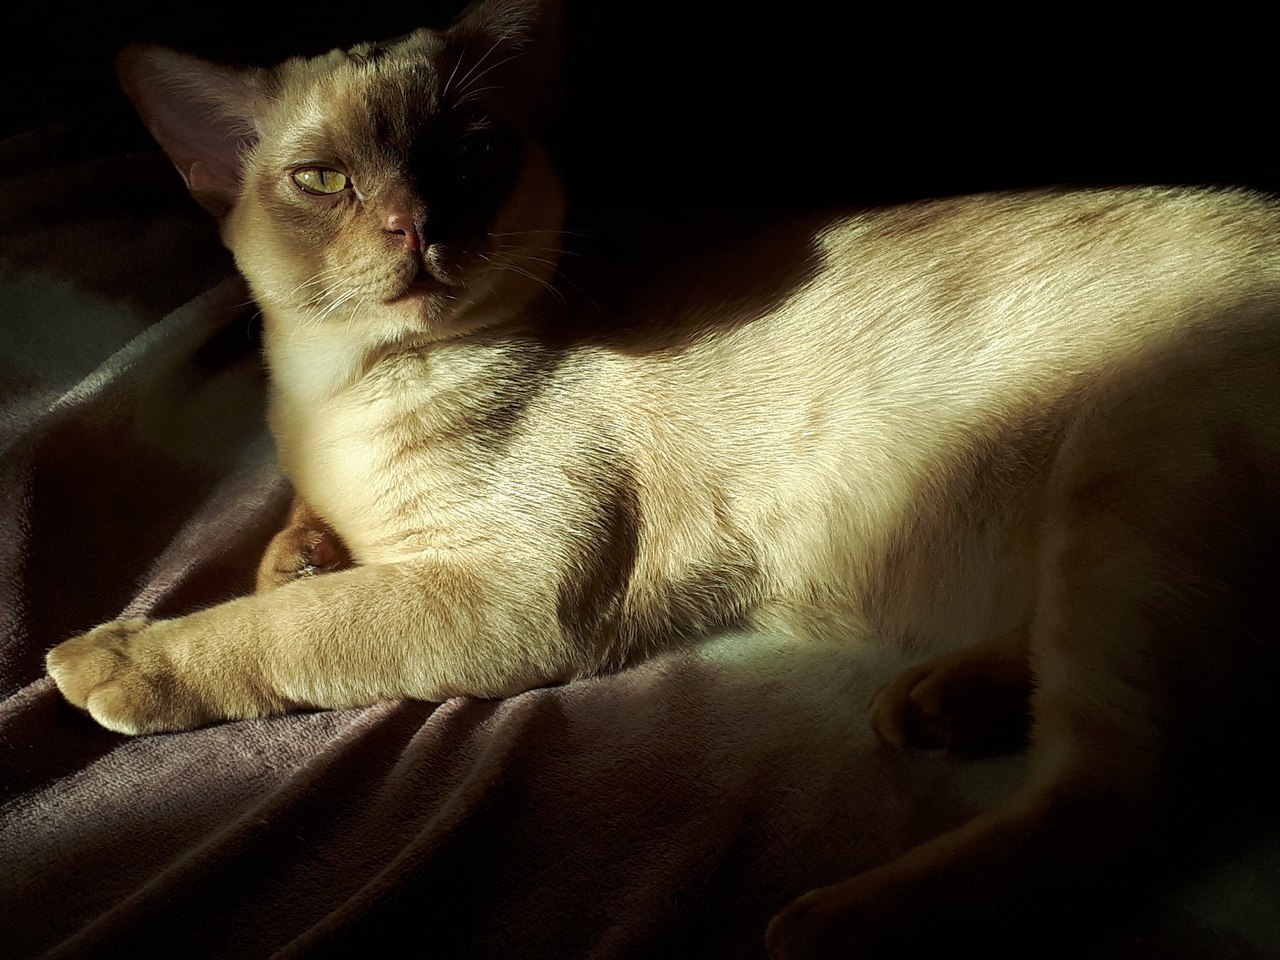 demonic cat beauty post - My, cat, Animals, The photo, , Burmese